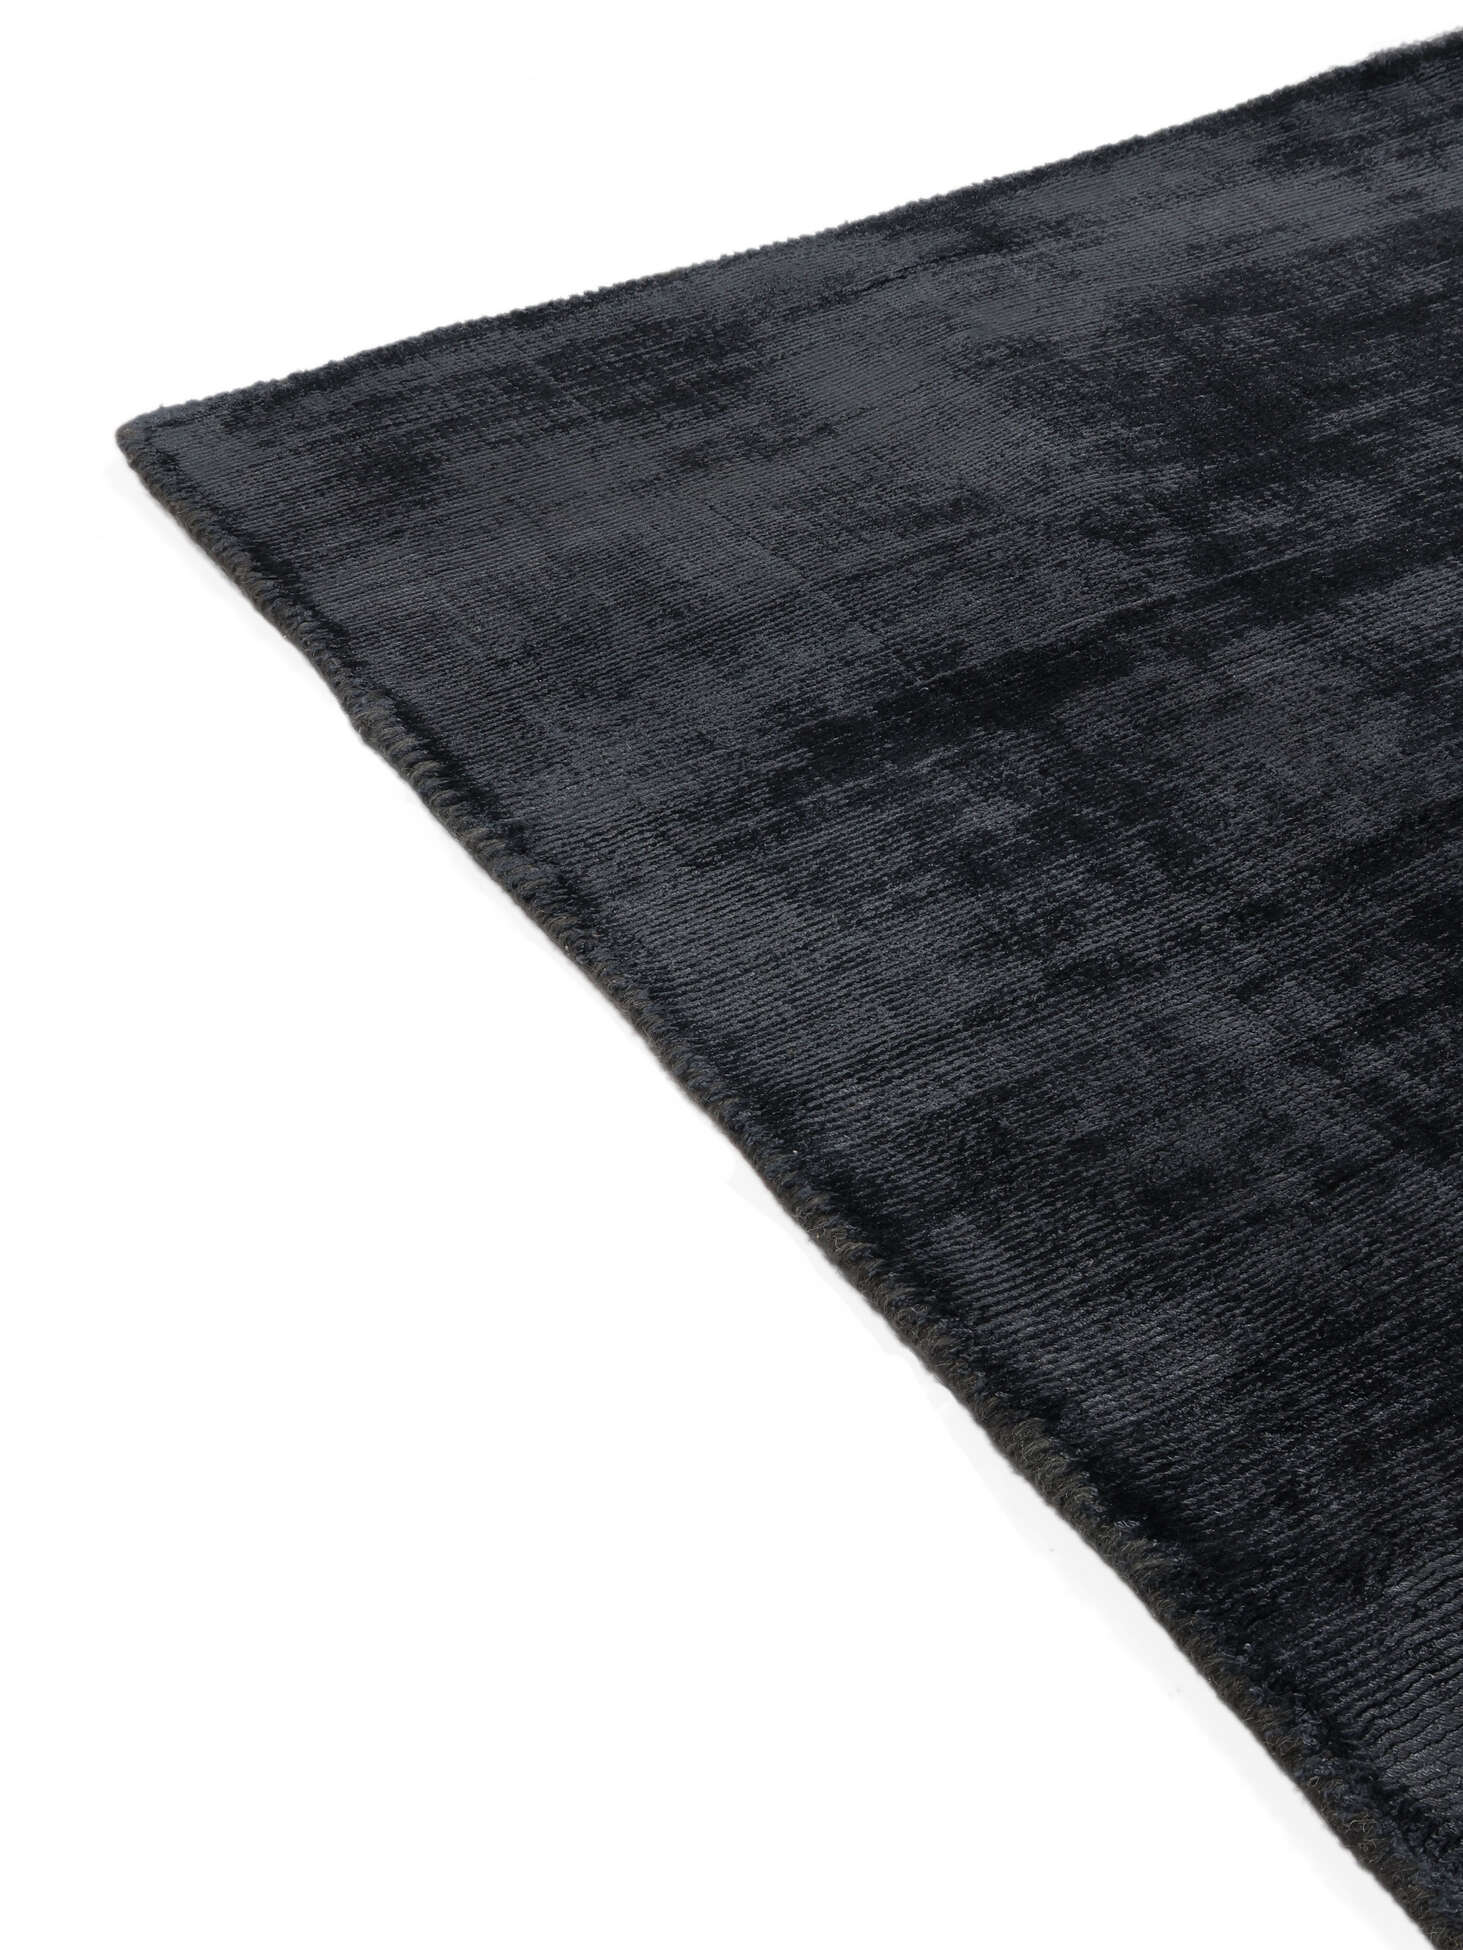 
    Tribeca - Charcoal grey - 140 x 200 cm
  